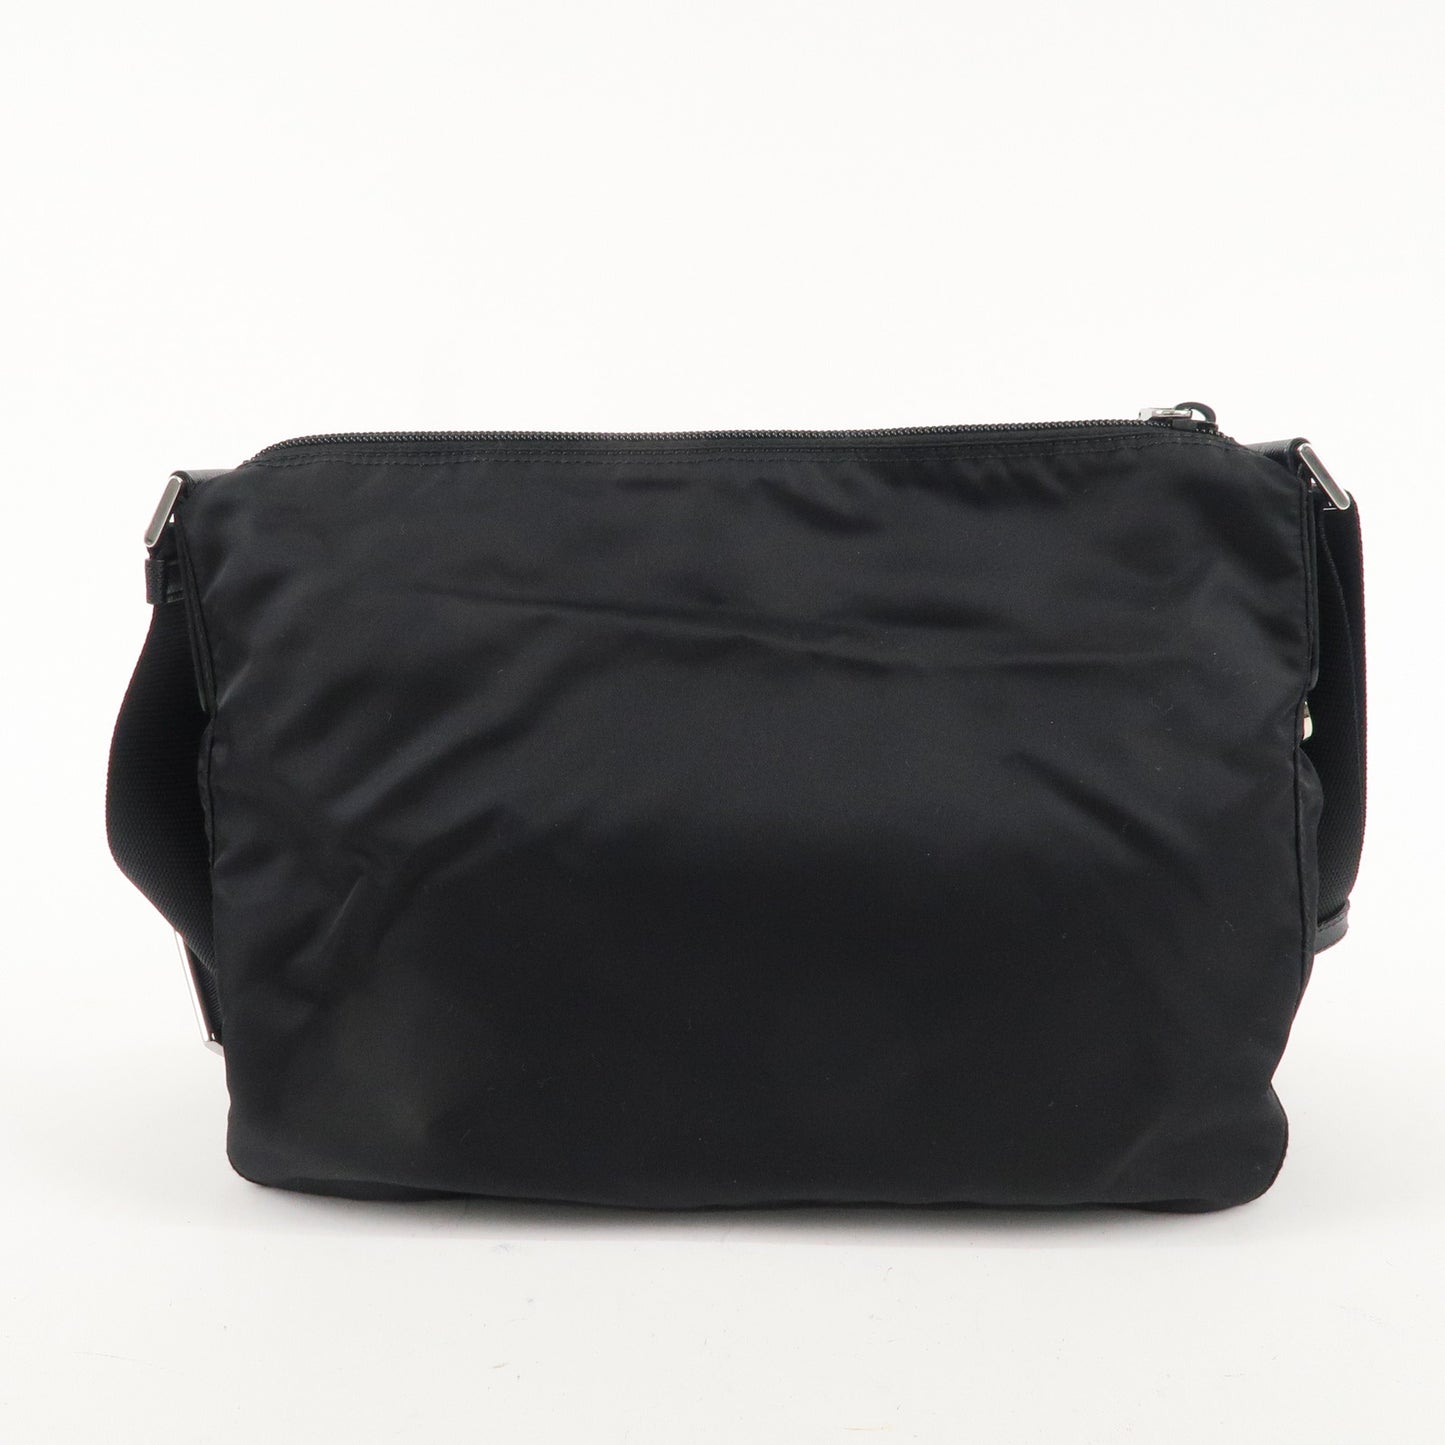 PRADA Logo Nylon Leather Shoulder Bag Crossbody Bag NERO Black